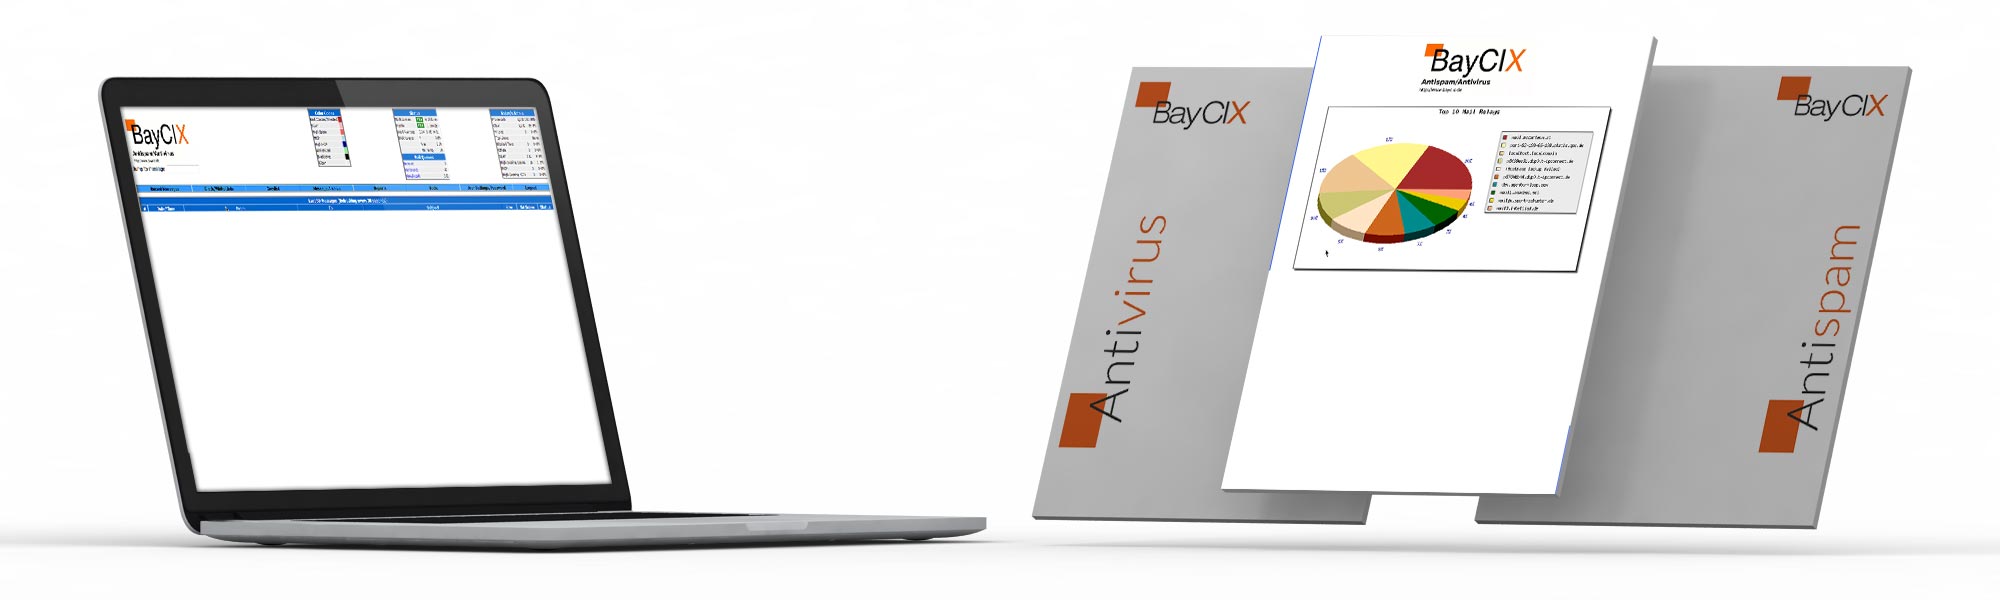 BayCIX Antivirus Antispam